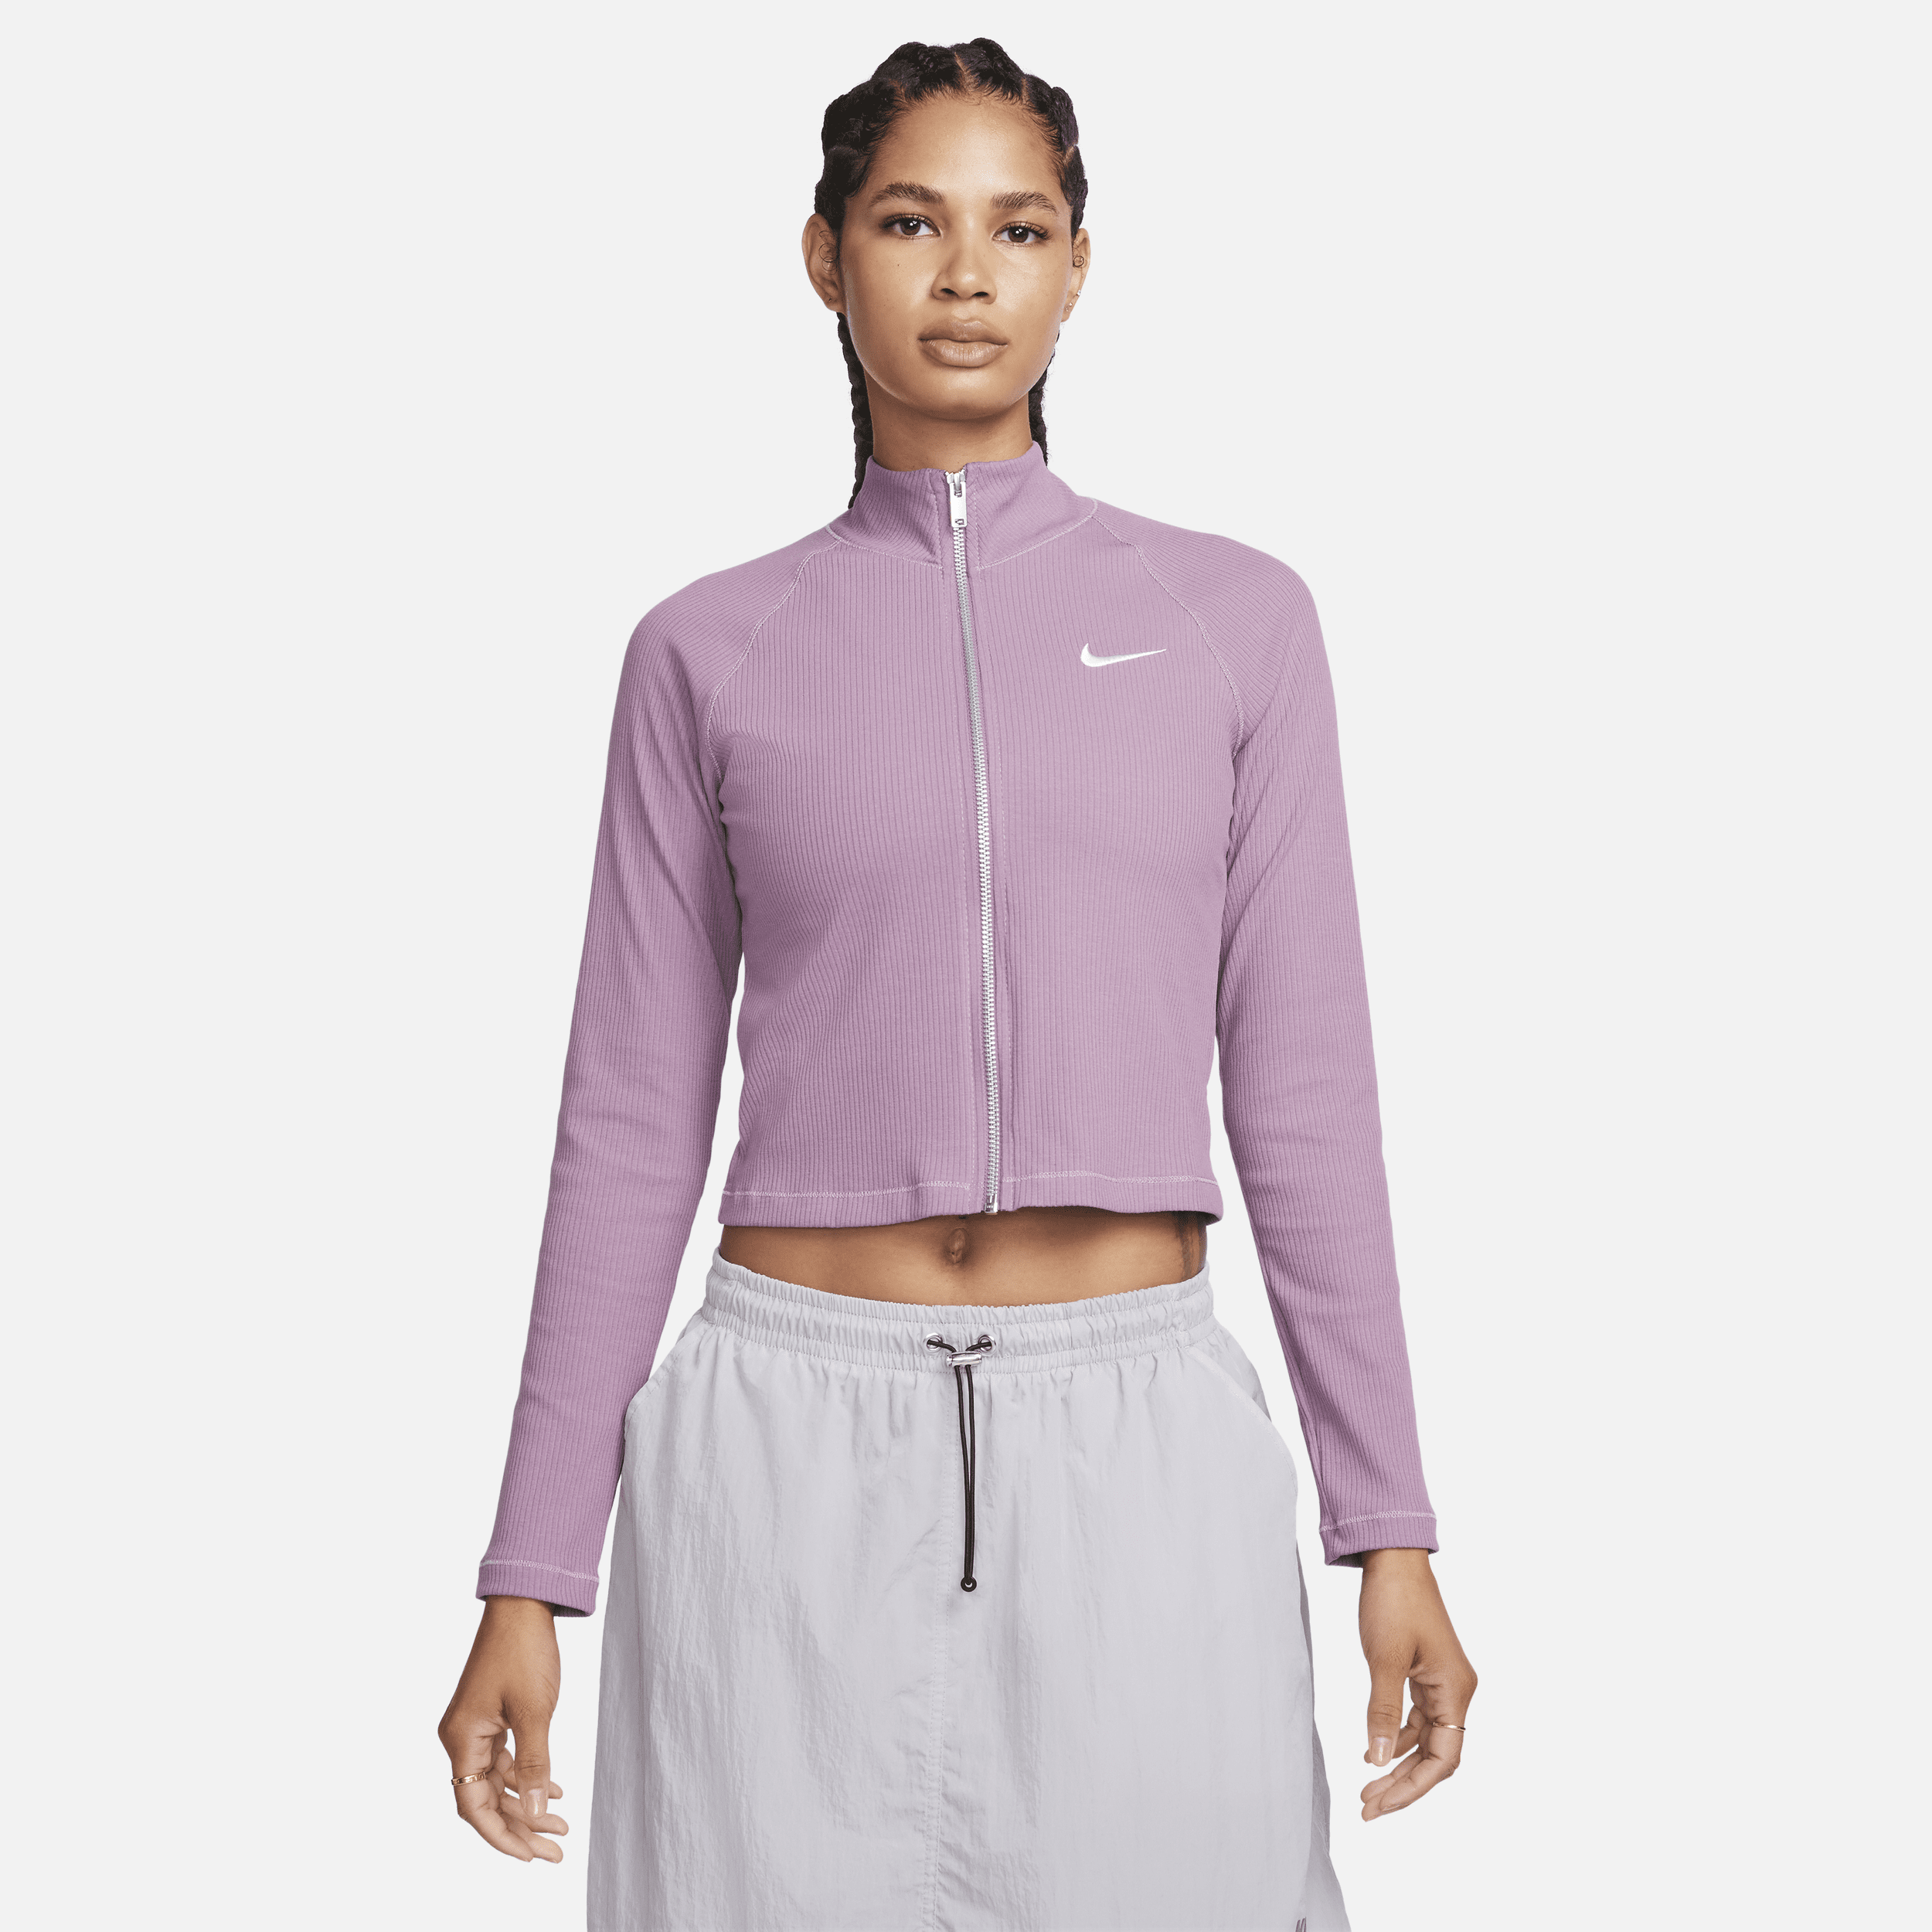 Nike Sportswear-jakke til kvinder - lilla